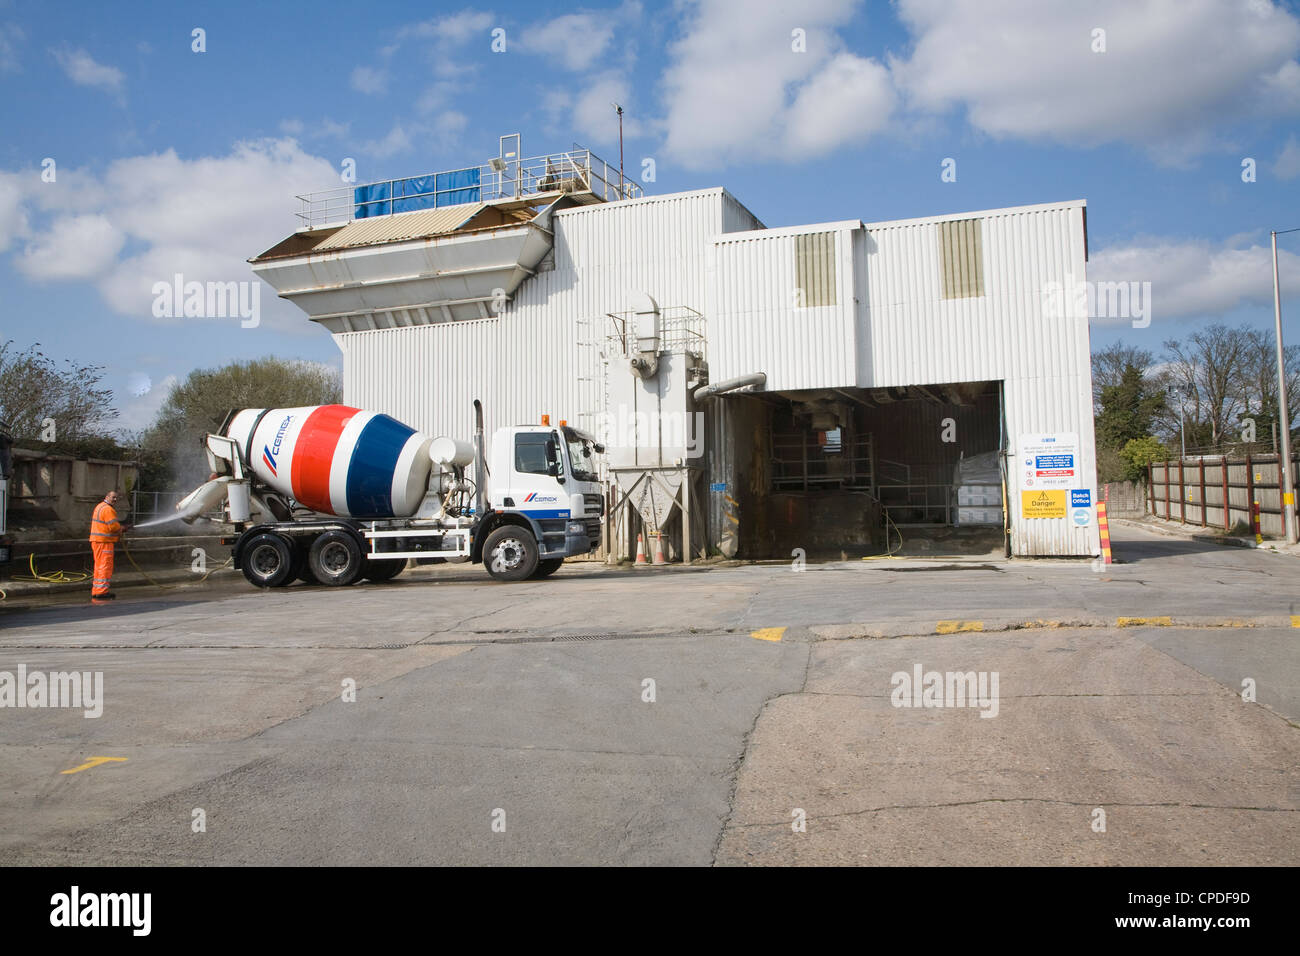 Cemex readymix cement plant Ipswich, Suffolk, England Stock Photo - Alamy